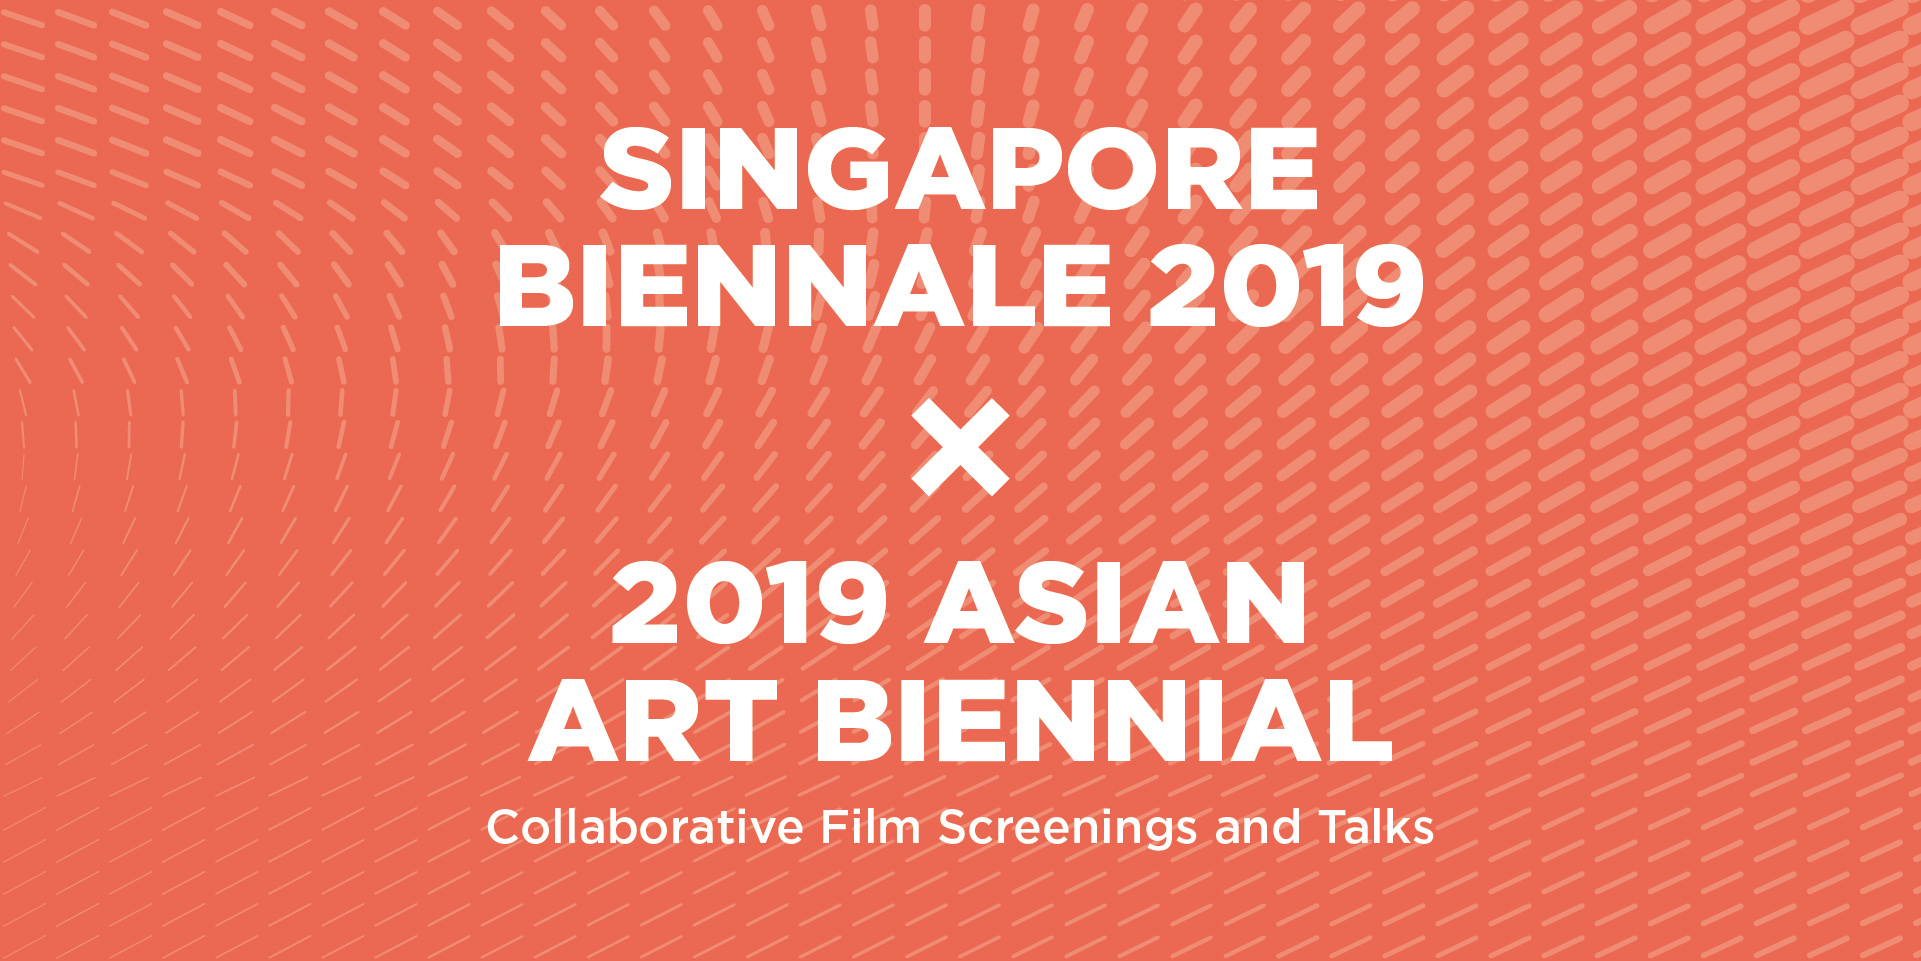 Singapore Biennale 2019 x 2019 Asian Art Biennial | Collaborative Film Screenings and Talks